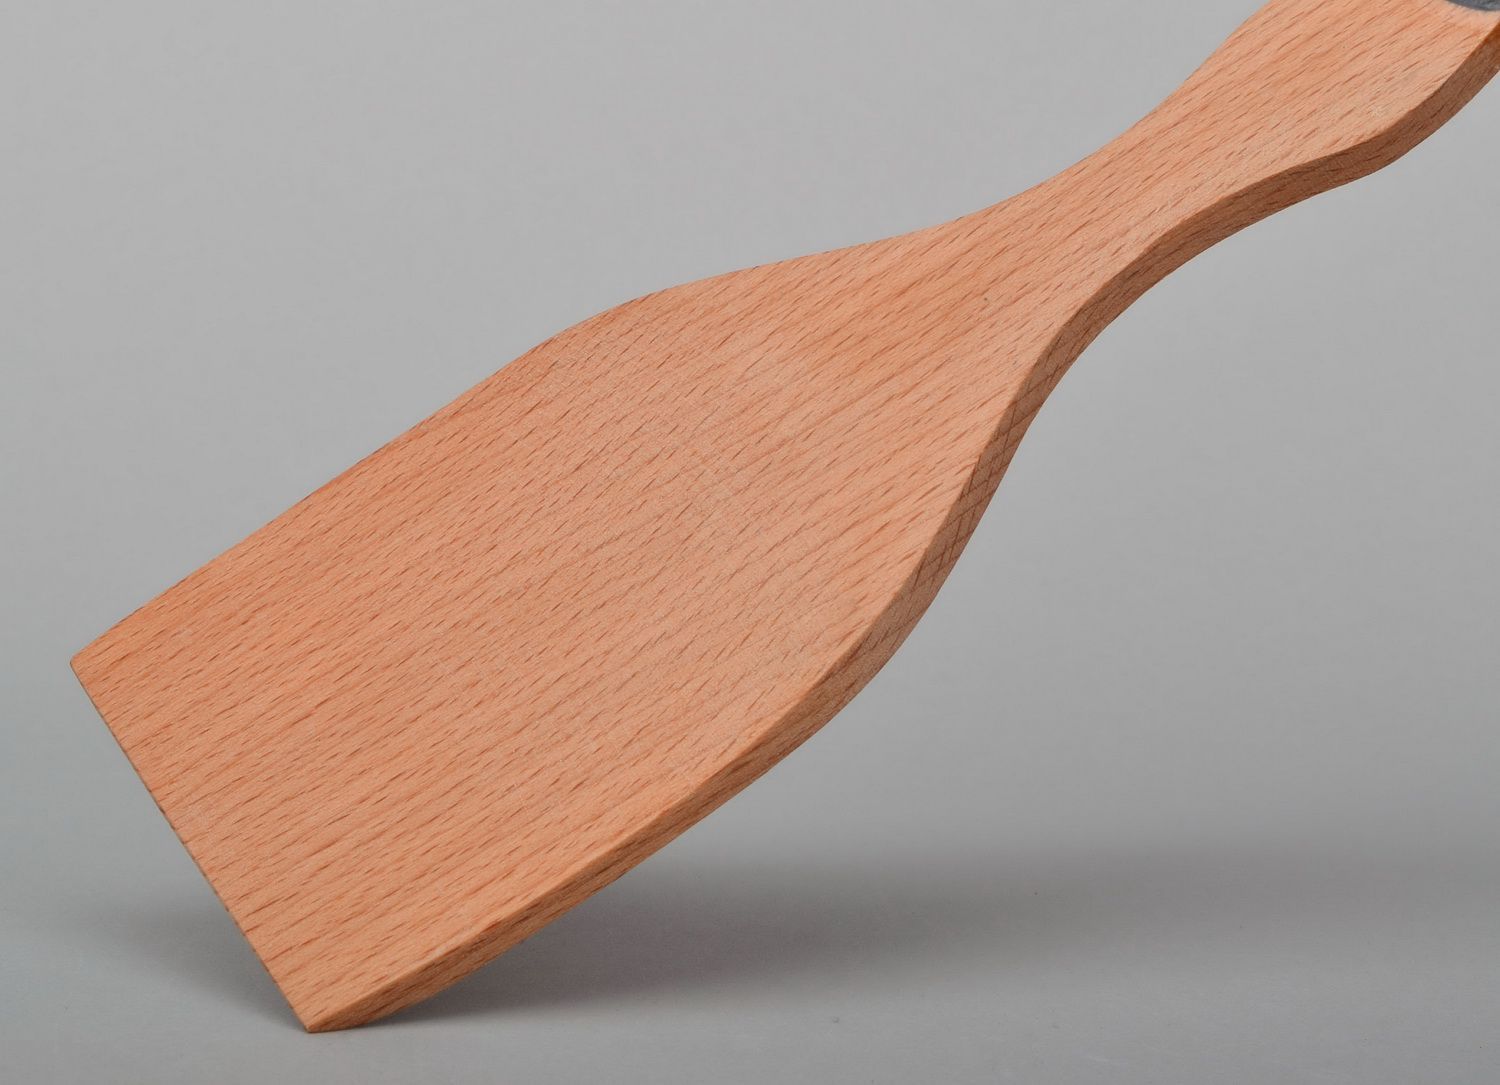 Wooden table spatula photo 1